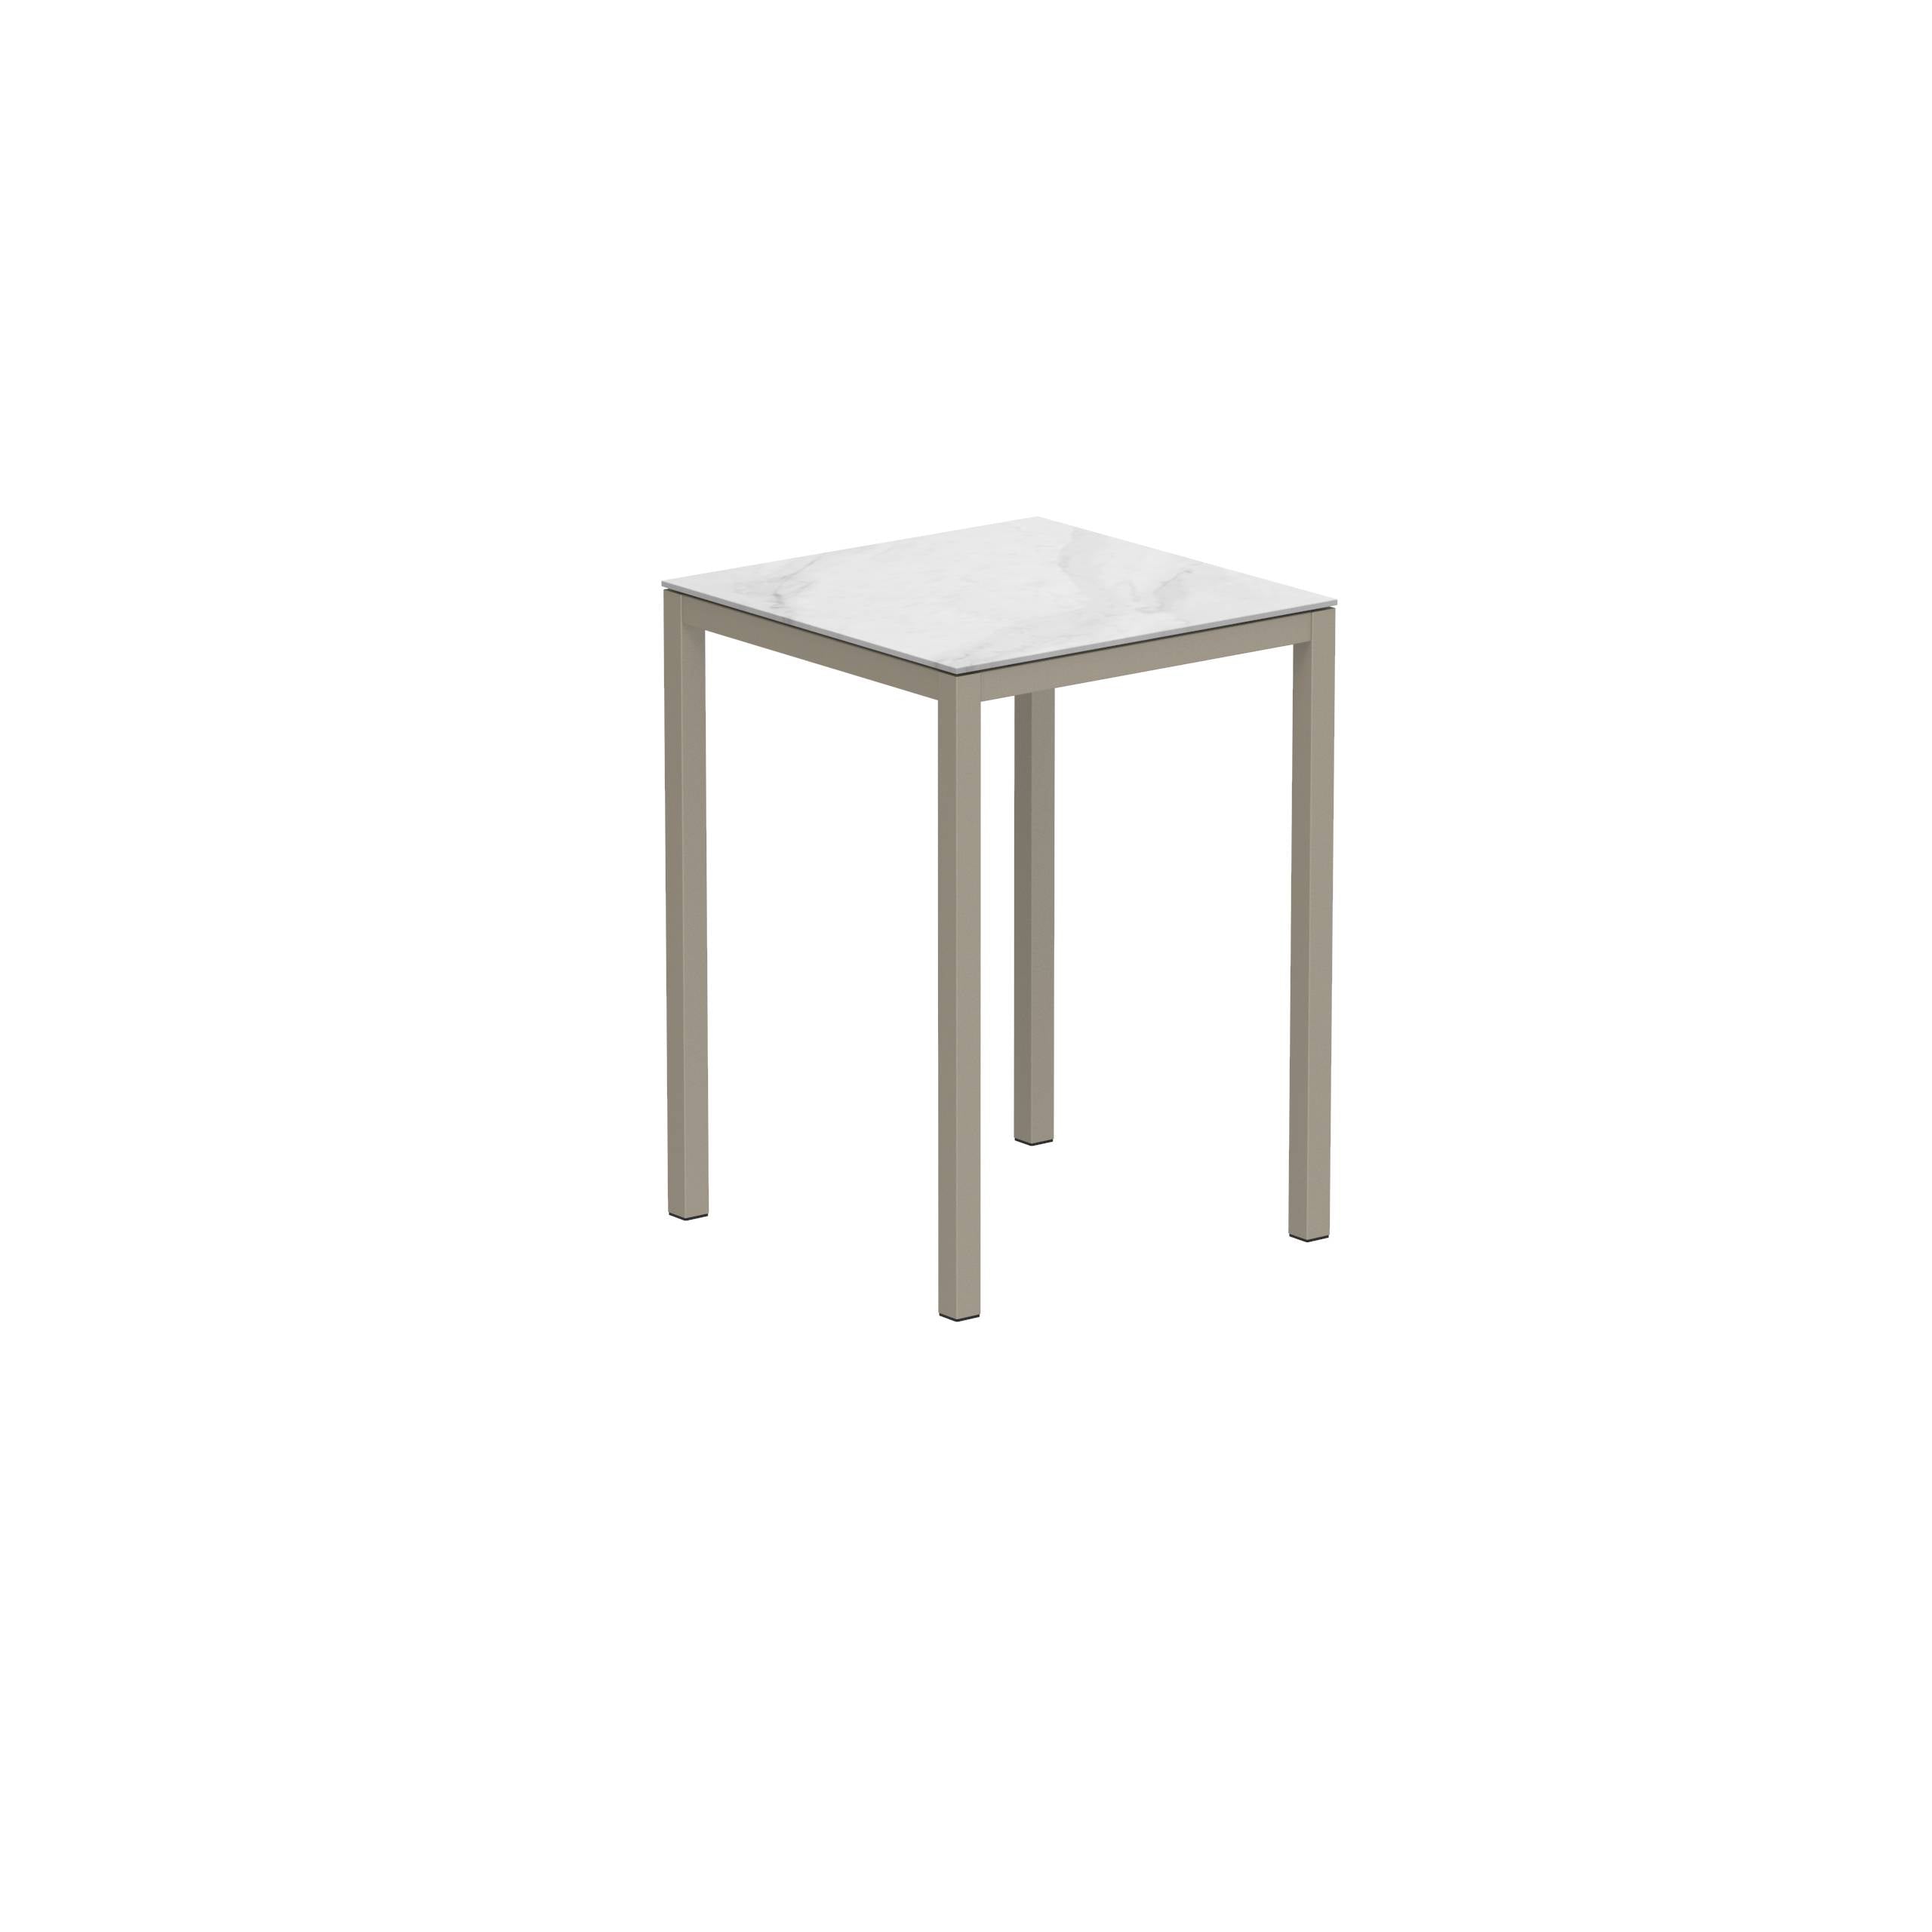 Taboela High Table 80x80cm Sand With Ceramic Tabletop Bianco Statuario